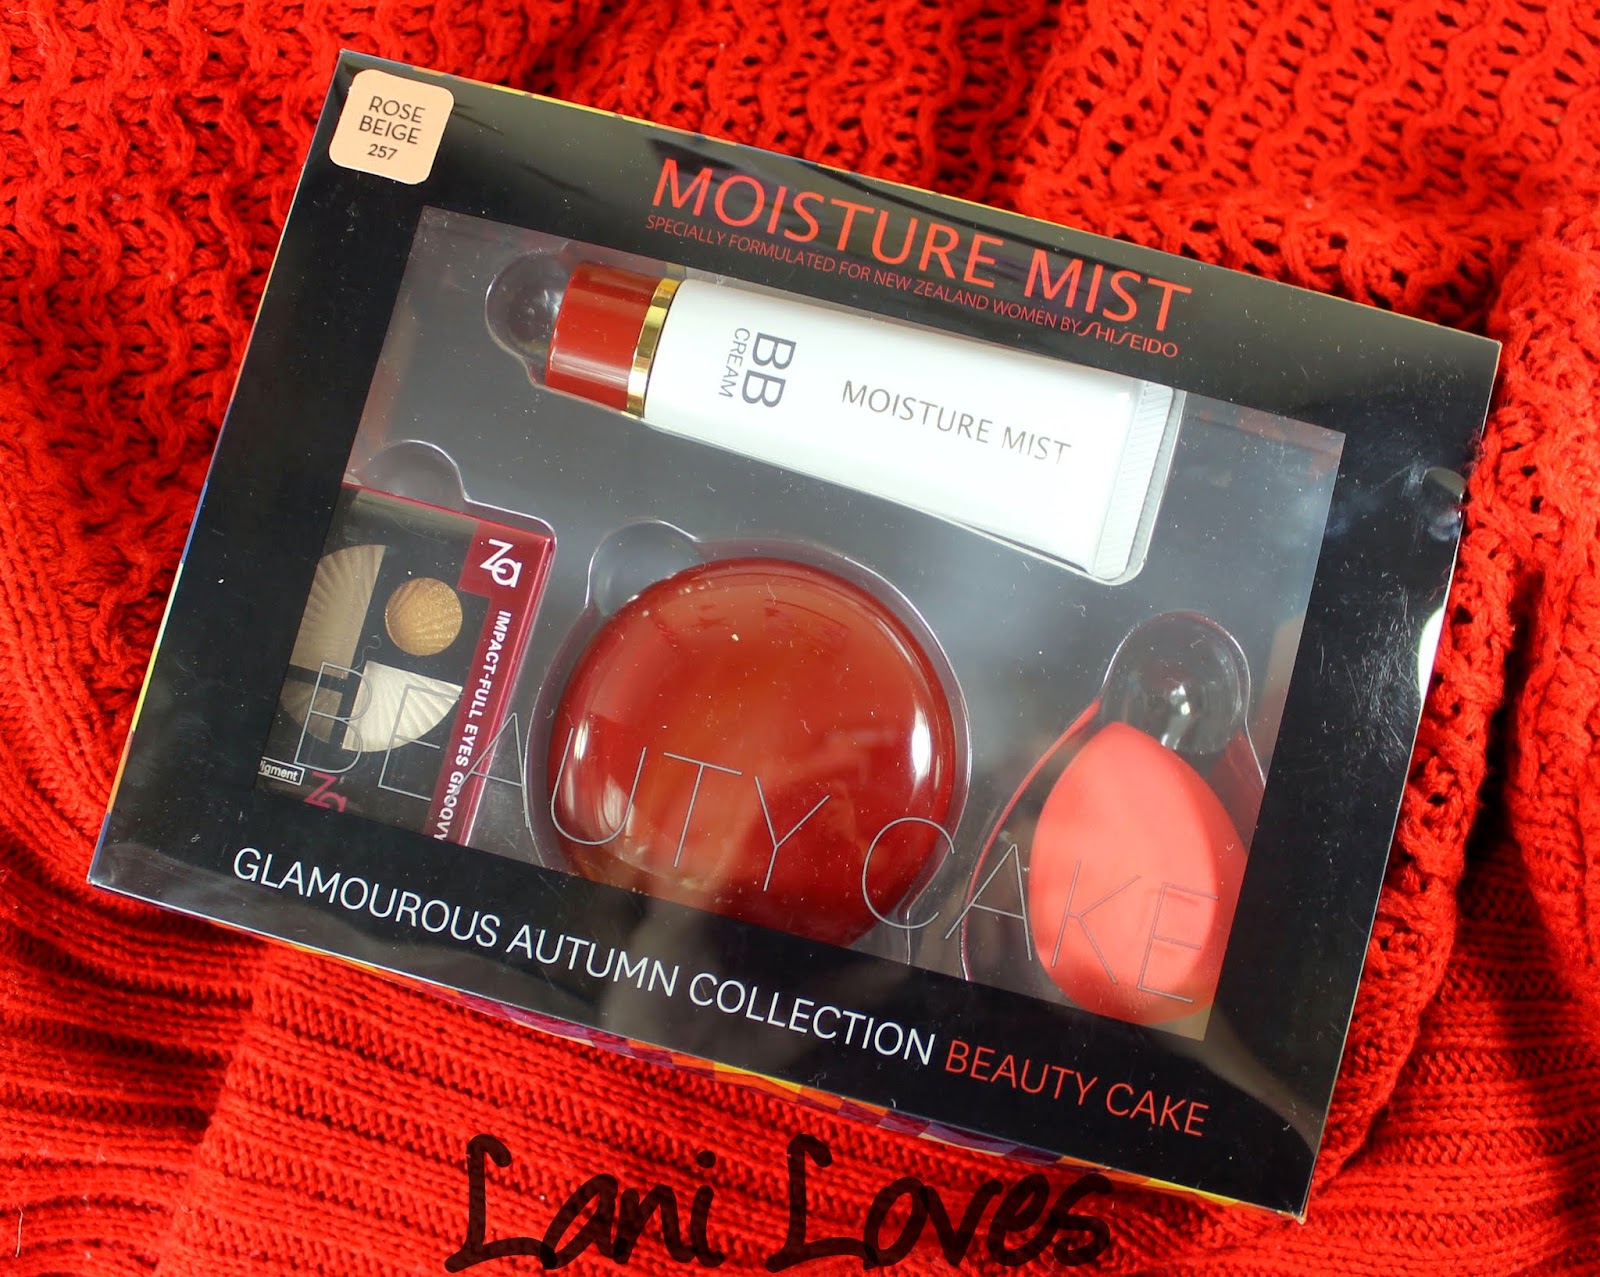 Moisture Mist Glamorous Autumn Collection Preview